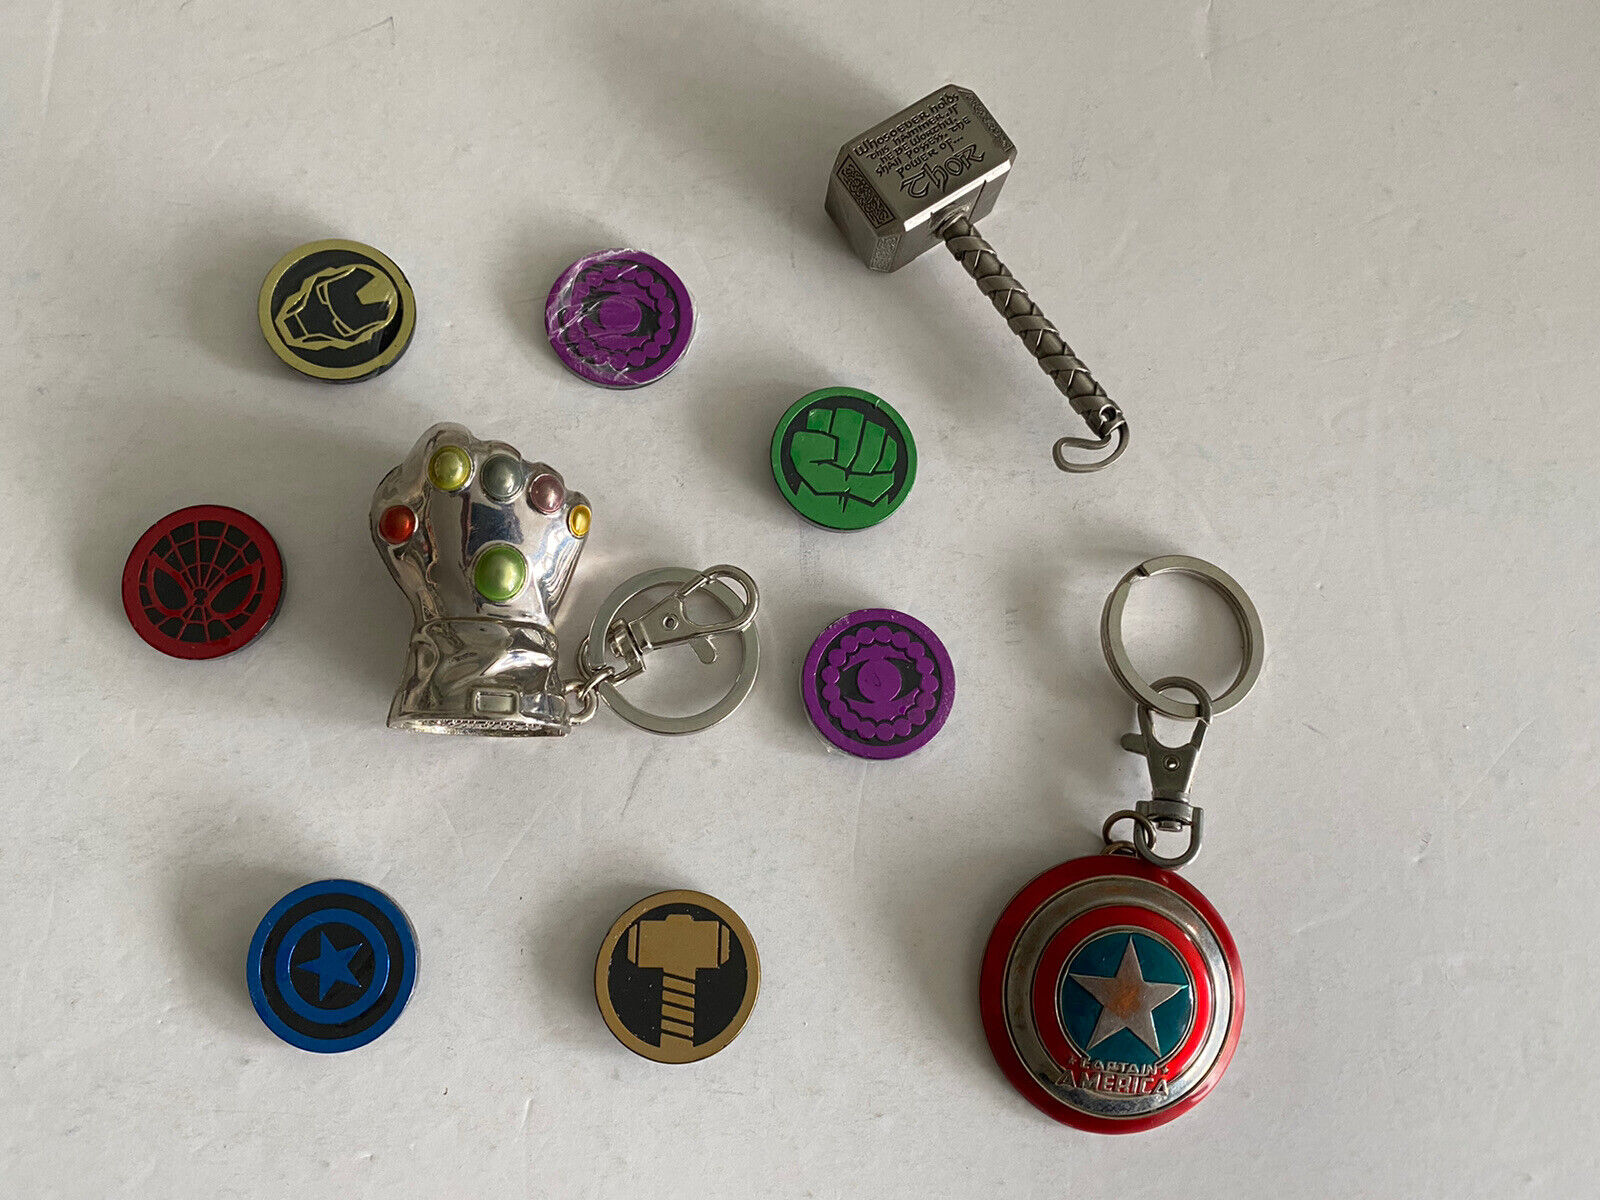 Marvel Avengers Thanos Infinity Gauntlet Key Chain Plus Other Marvel Merchandise